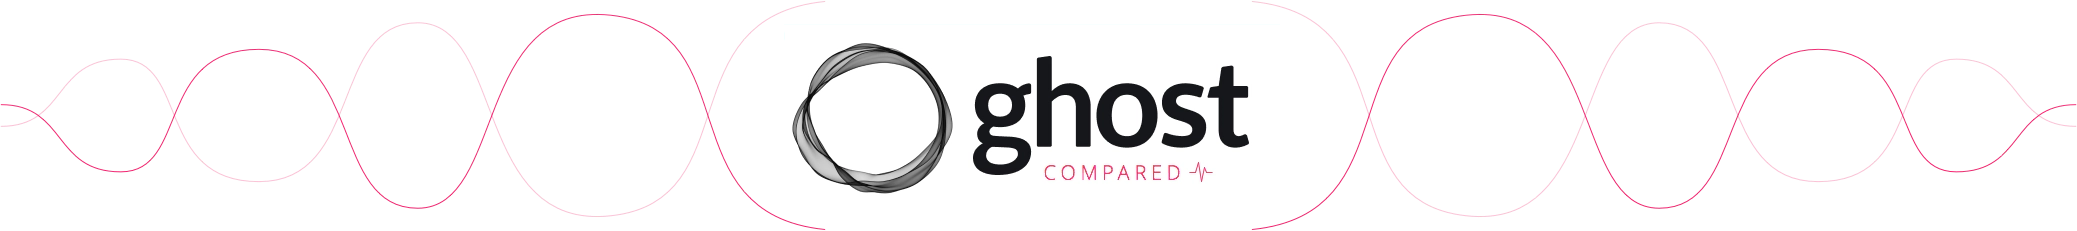 Ghost vs Gumroad Comparison Banner